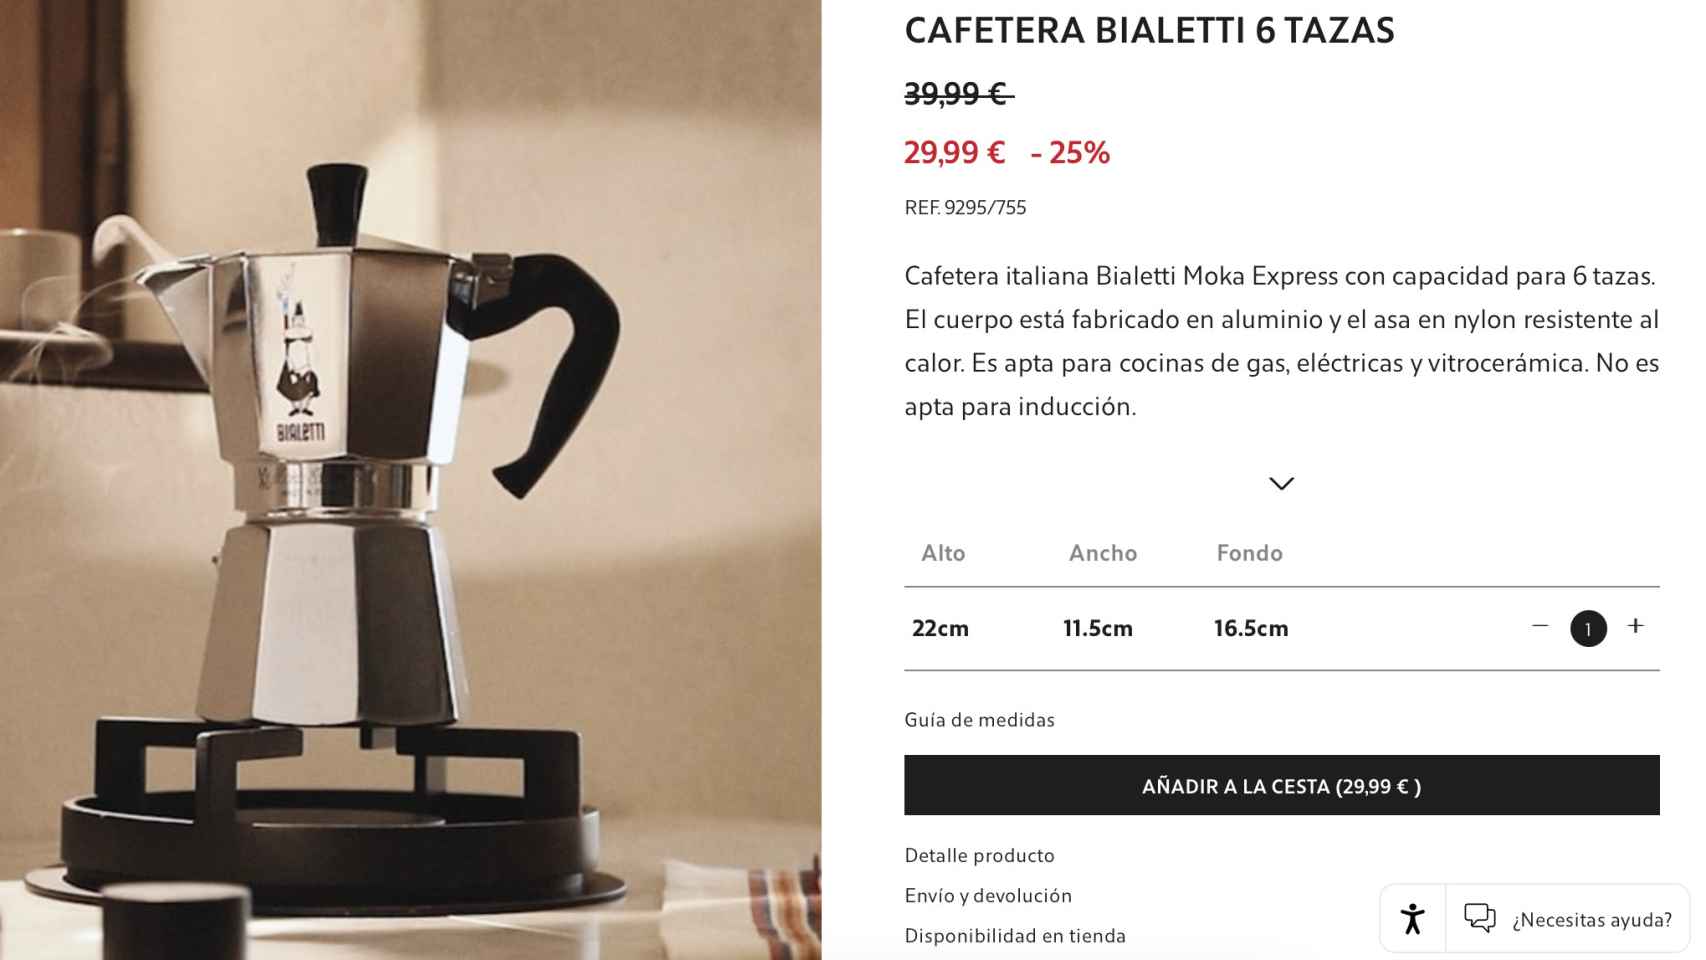 Cafetera Bialetti.